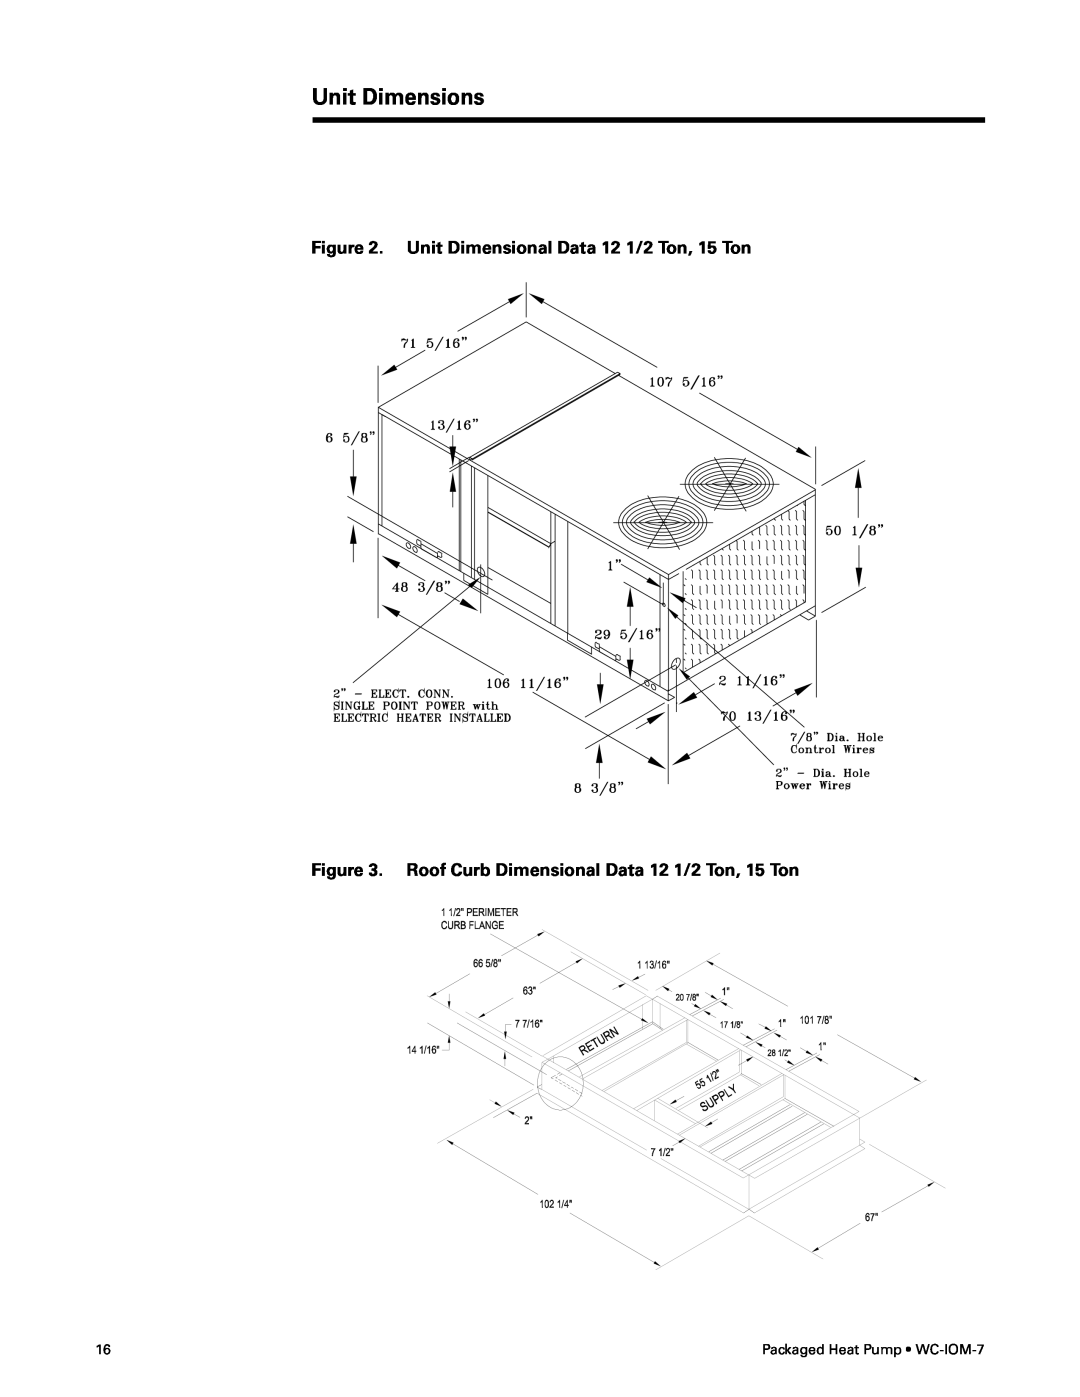 Trane manual Unit Dimensions, Packaged Heat Pump WC-IOM-7 